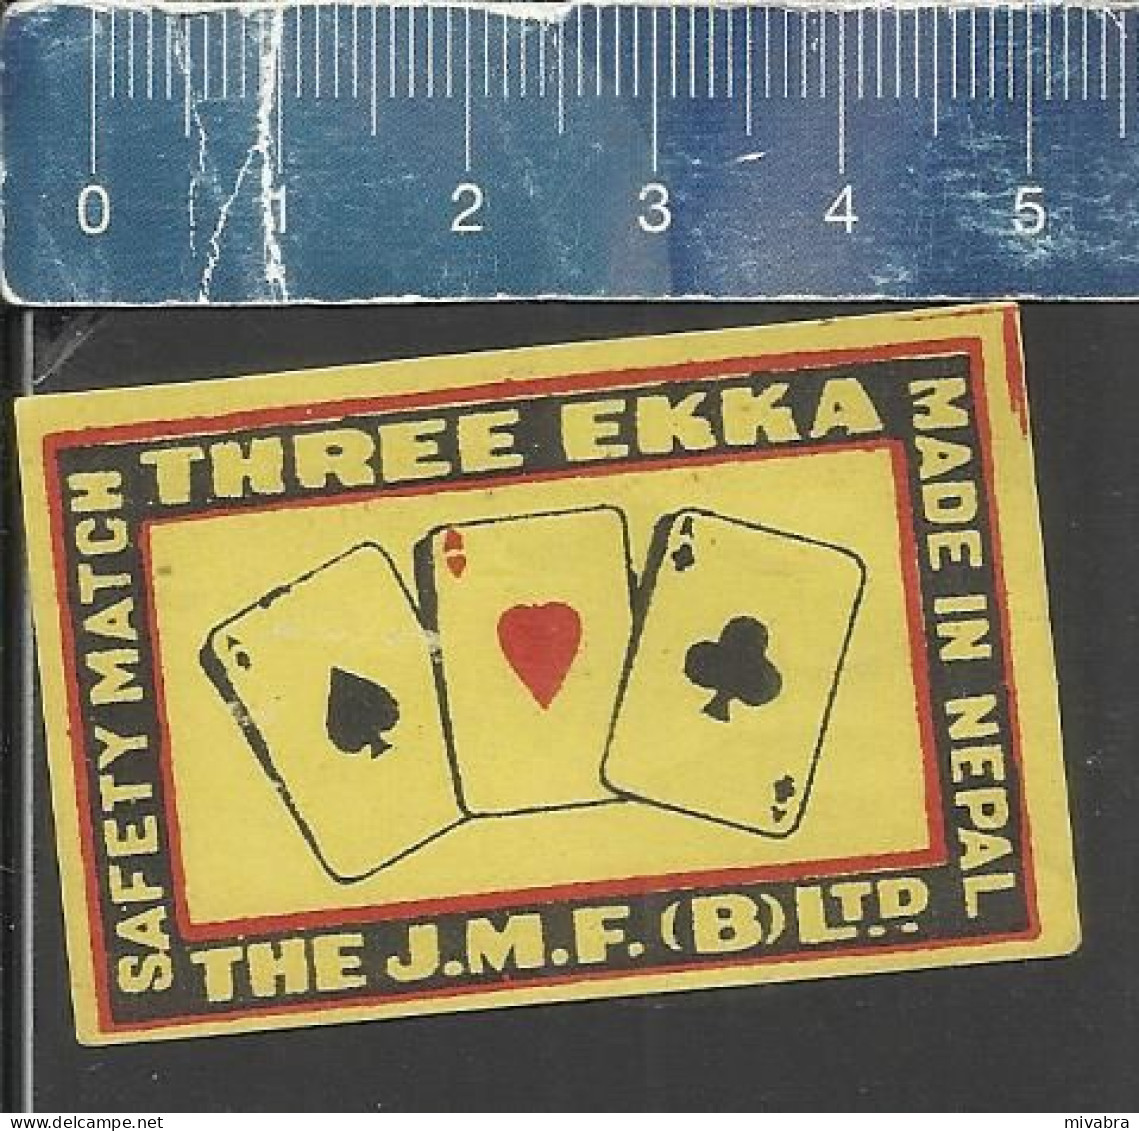 THREE EKKA ( THREE ACES - PLAYING CARDS )  - OLD VINTAGE MATCHBOX LABEL MADE IN NEPAL J.M.F. JOODHA MATCH FACTORY - Scatole Di Fiammiferi - Etichette